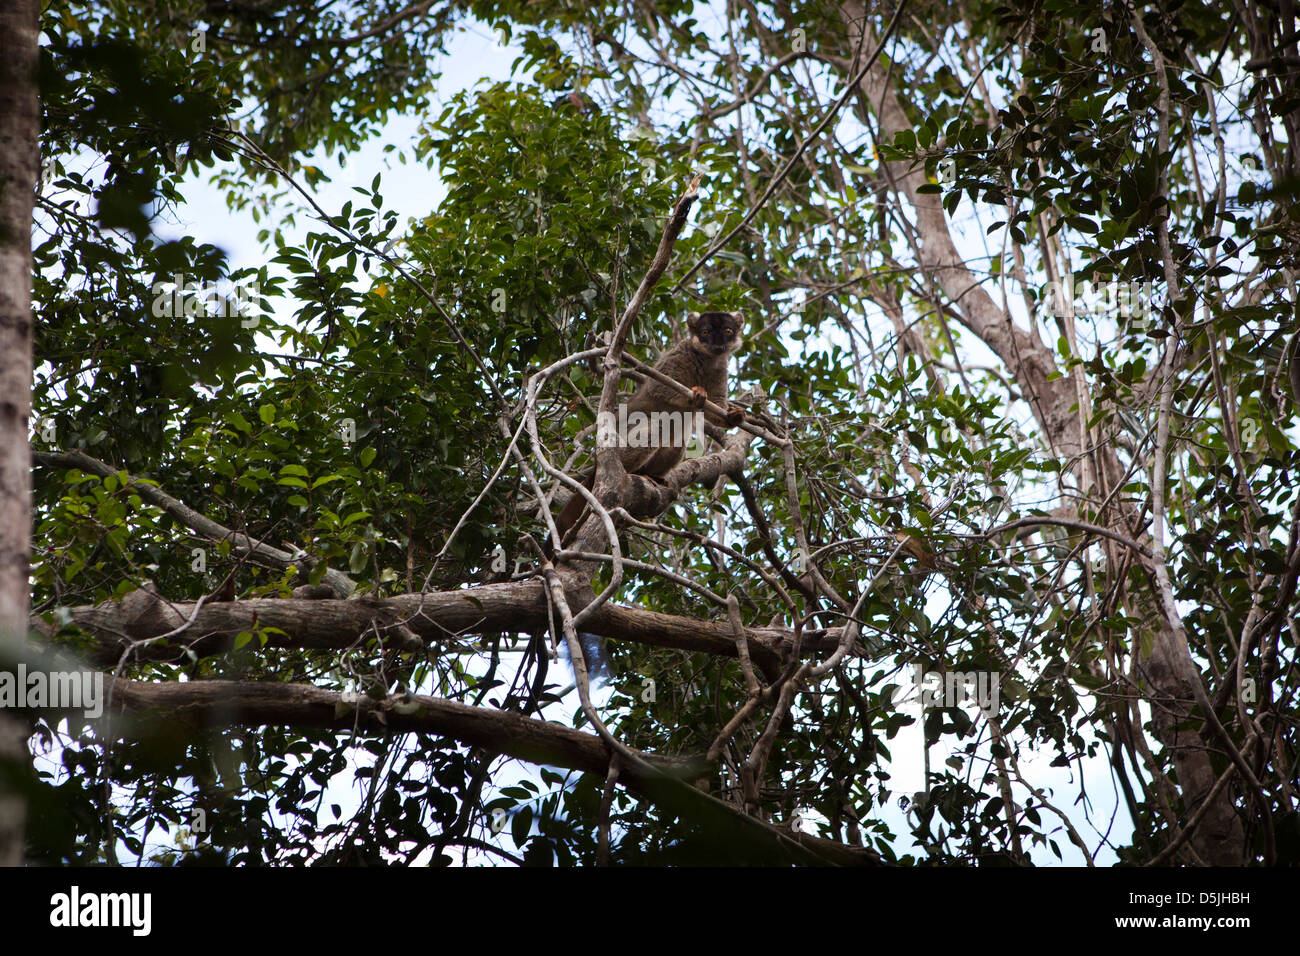 Madagaskar, Trockenwald Tiere, braune Lemur Eulemur Fulvus in Baum Stockfoto